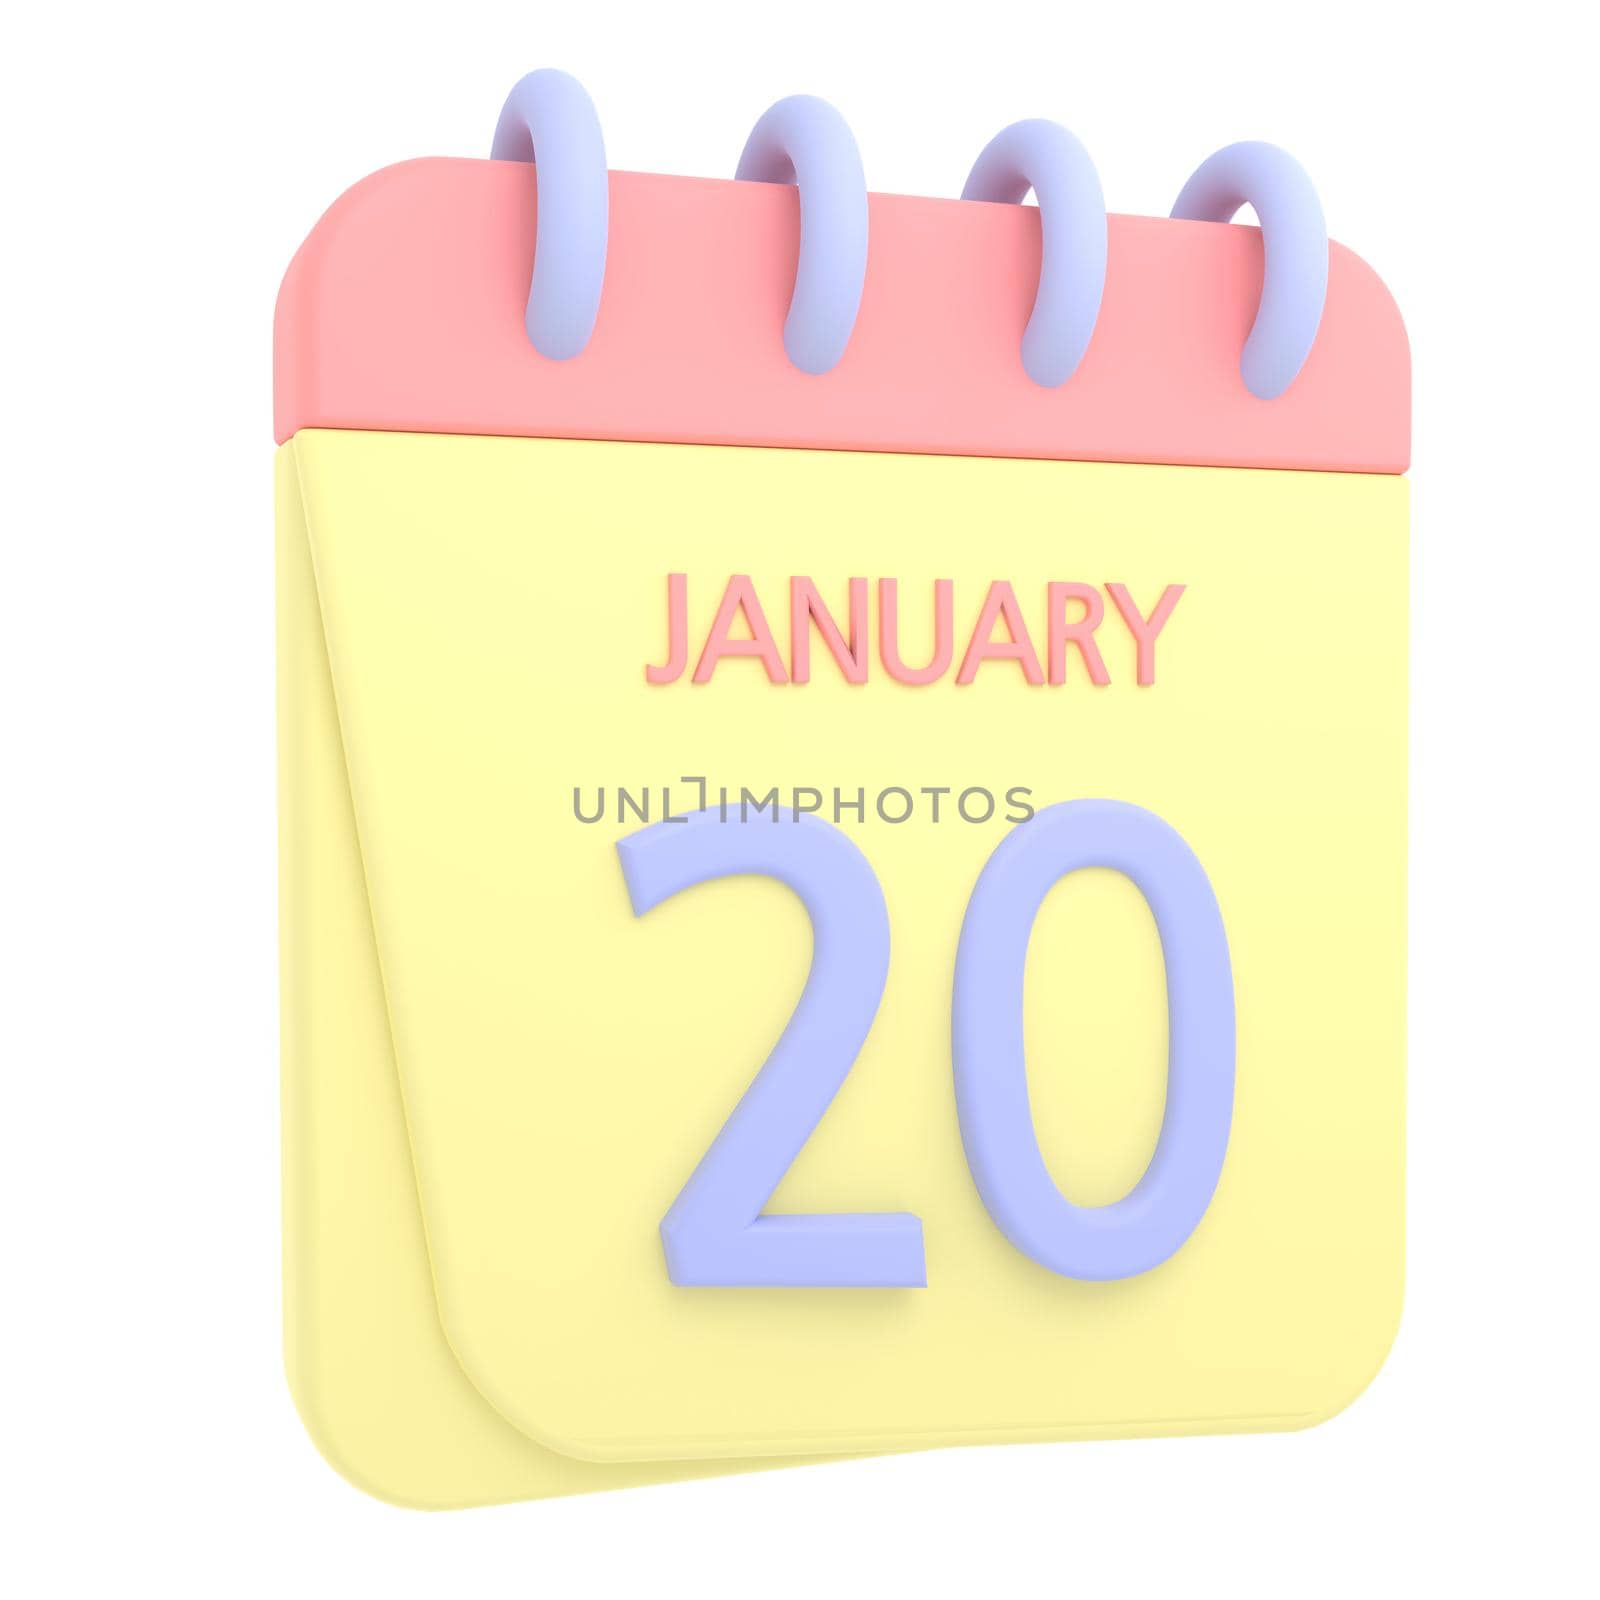 20th January 3D calendar icon by AnnaMarin